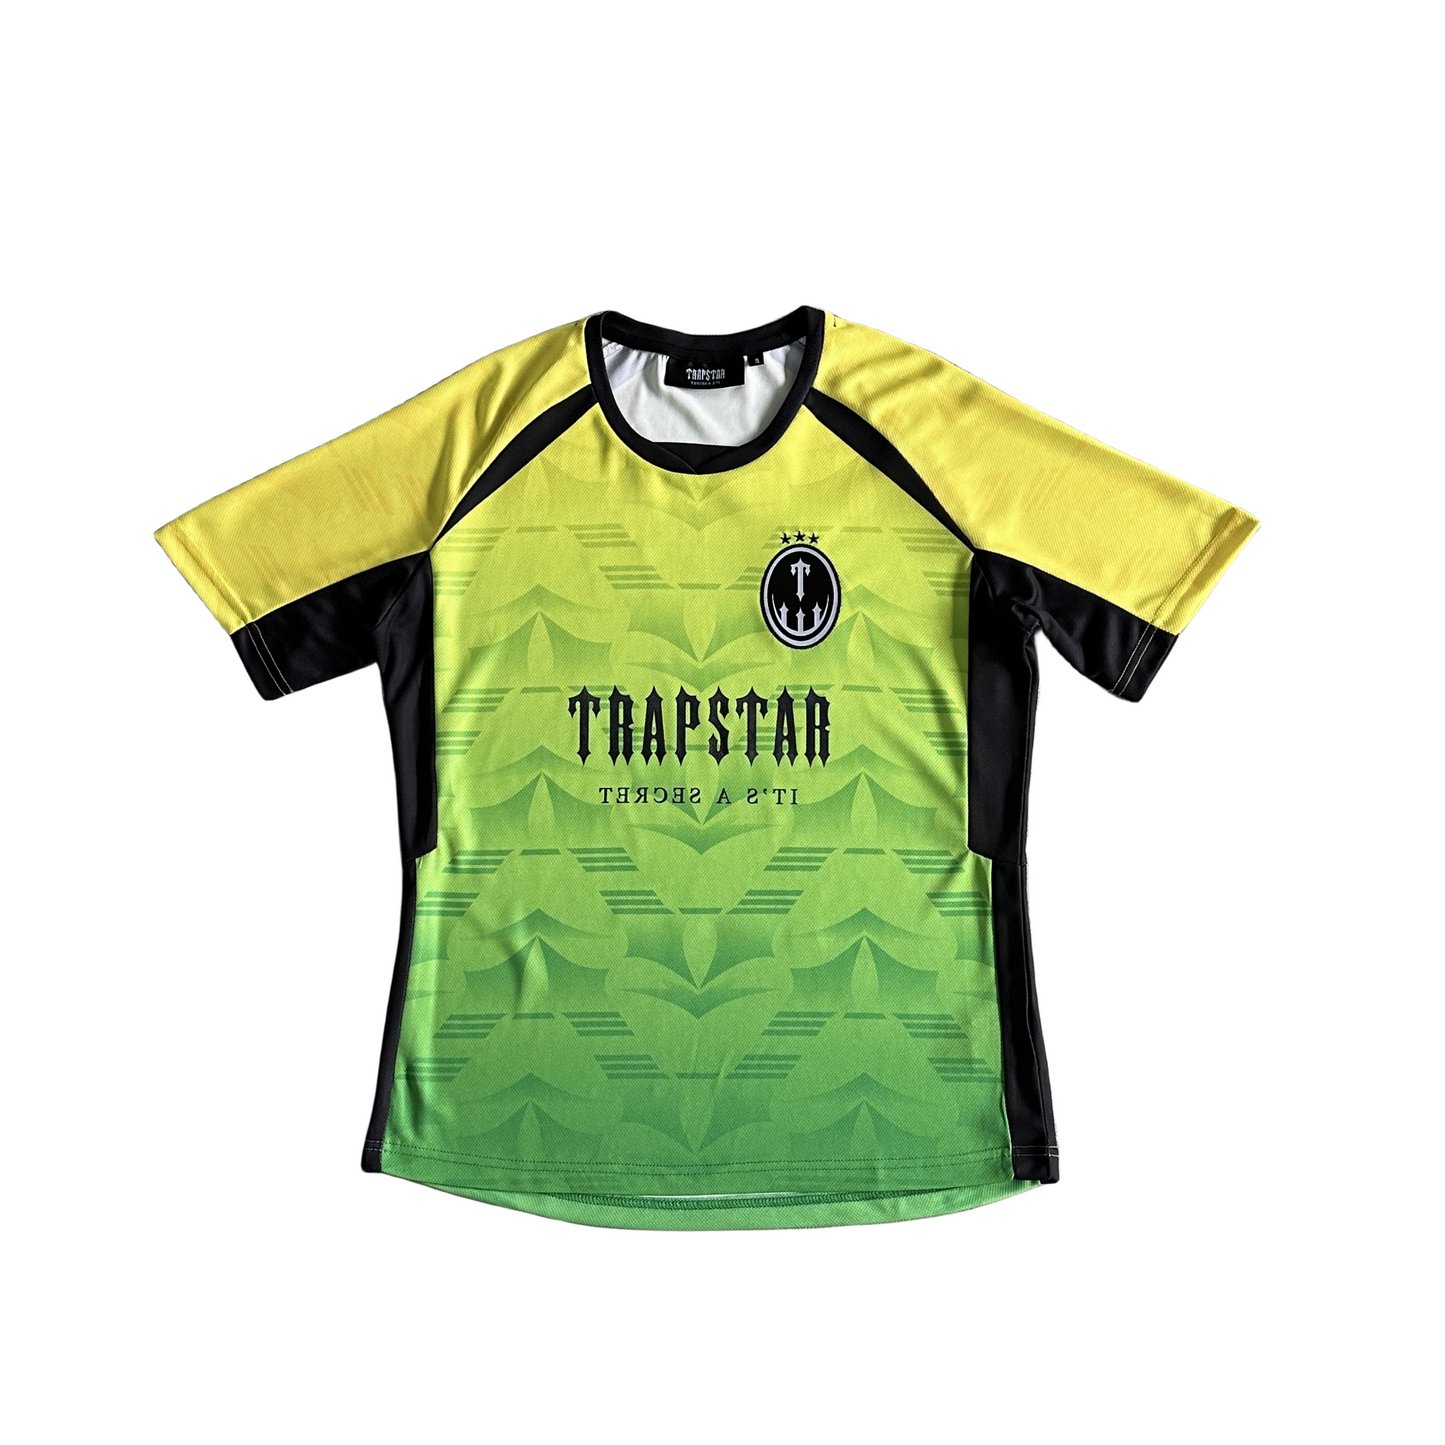 Trapstar Irongate Carnival Edition Football Jersey T Shirts - Green